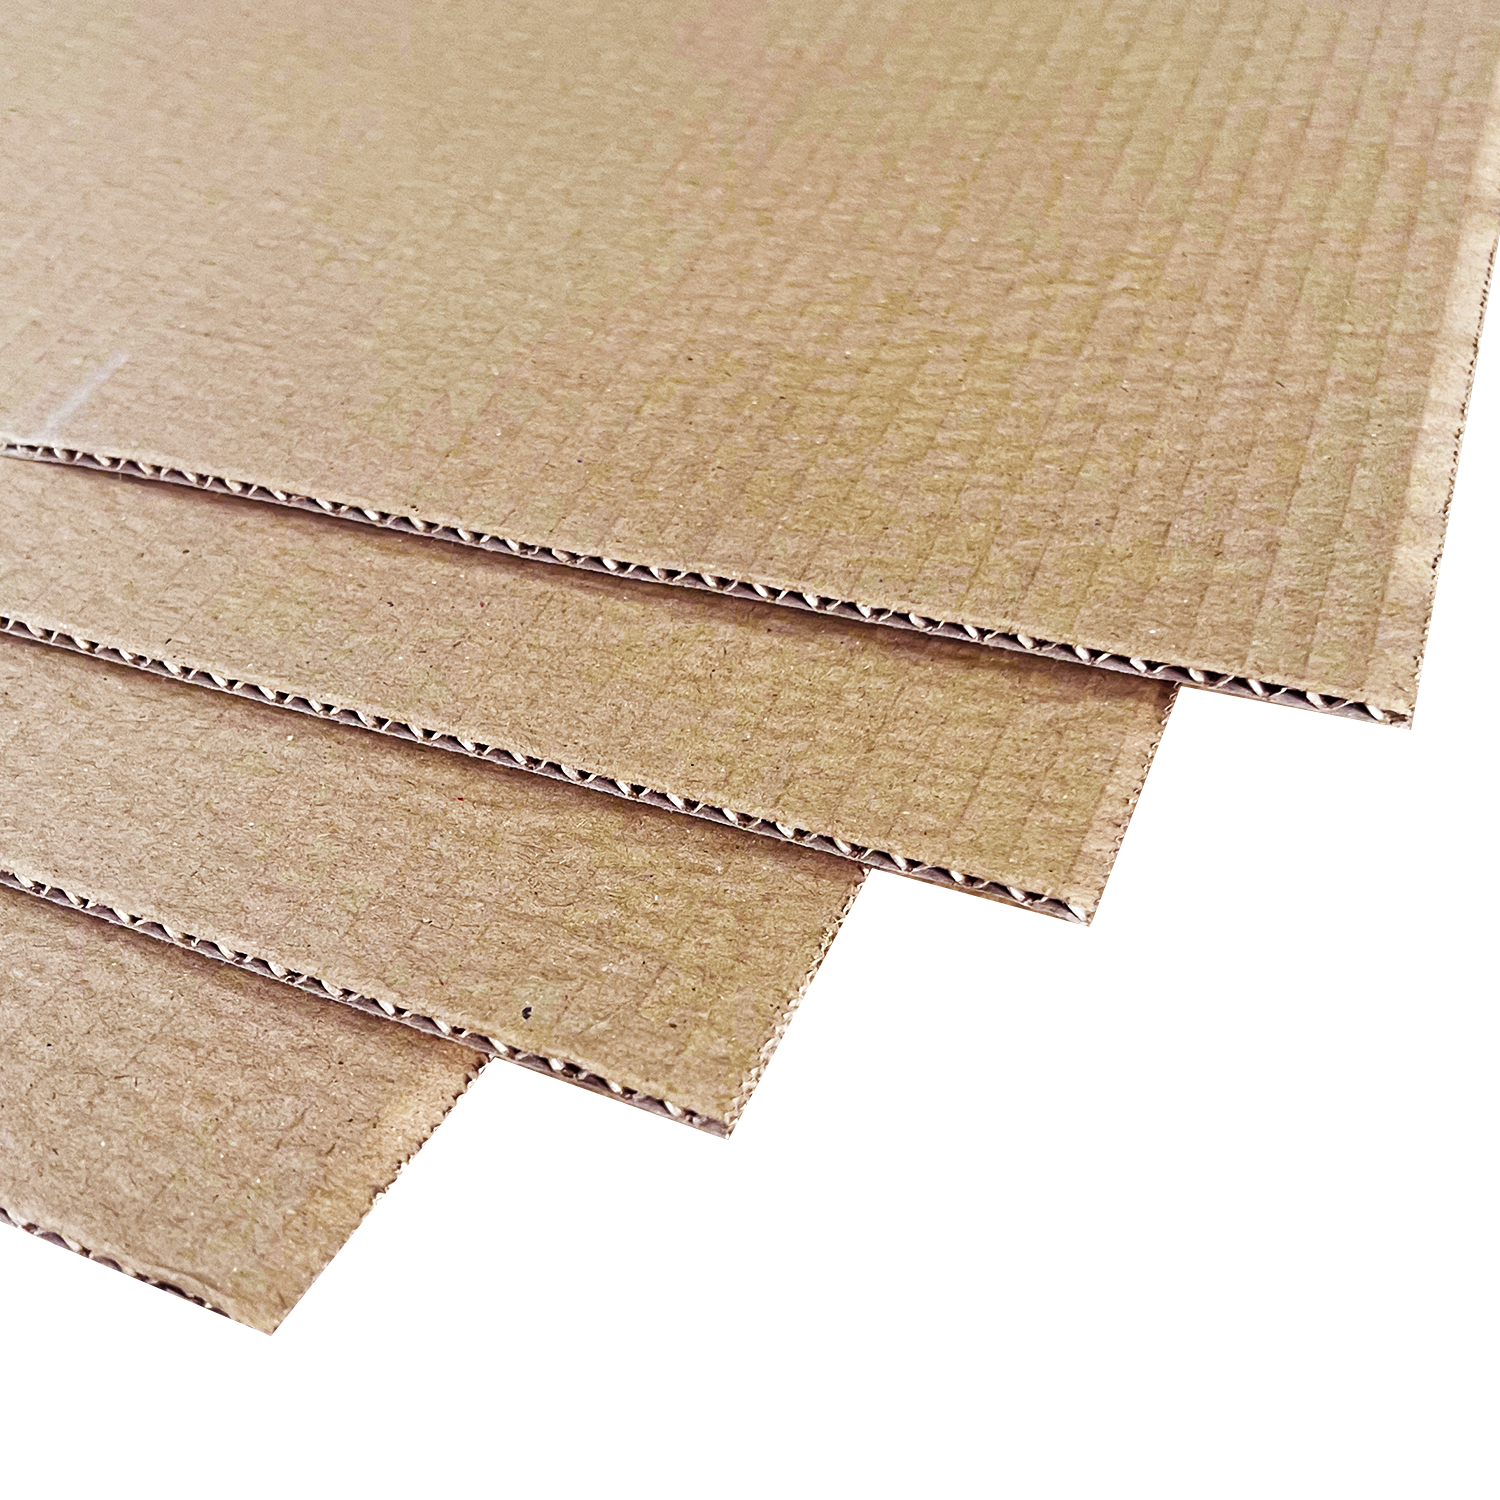 Single Wall Cardboard Pallet Layer Sheets - 1000mm x 1200mm